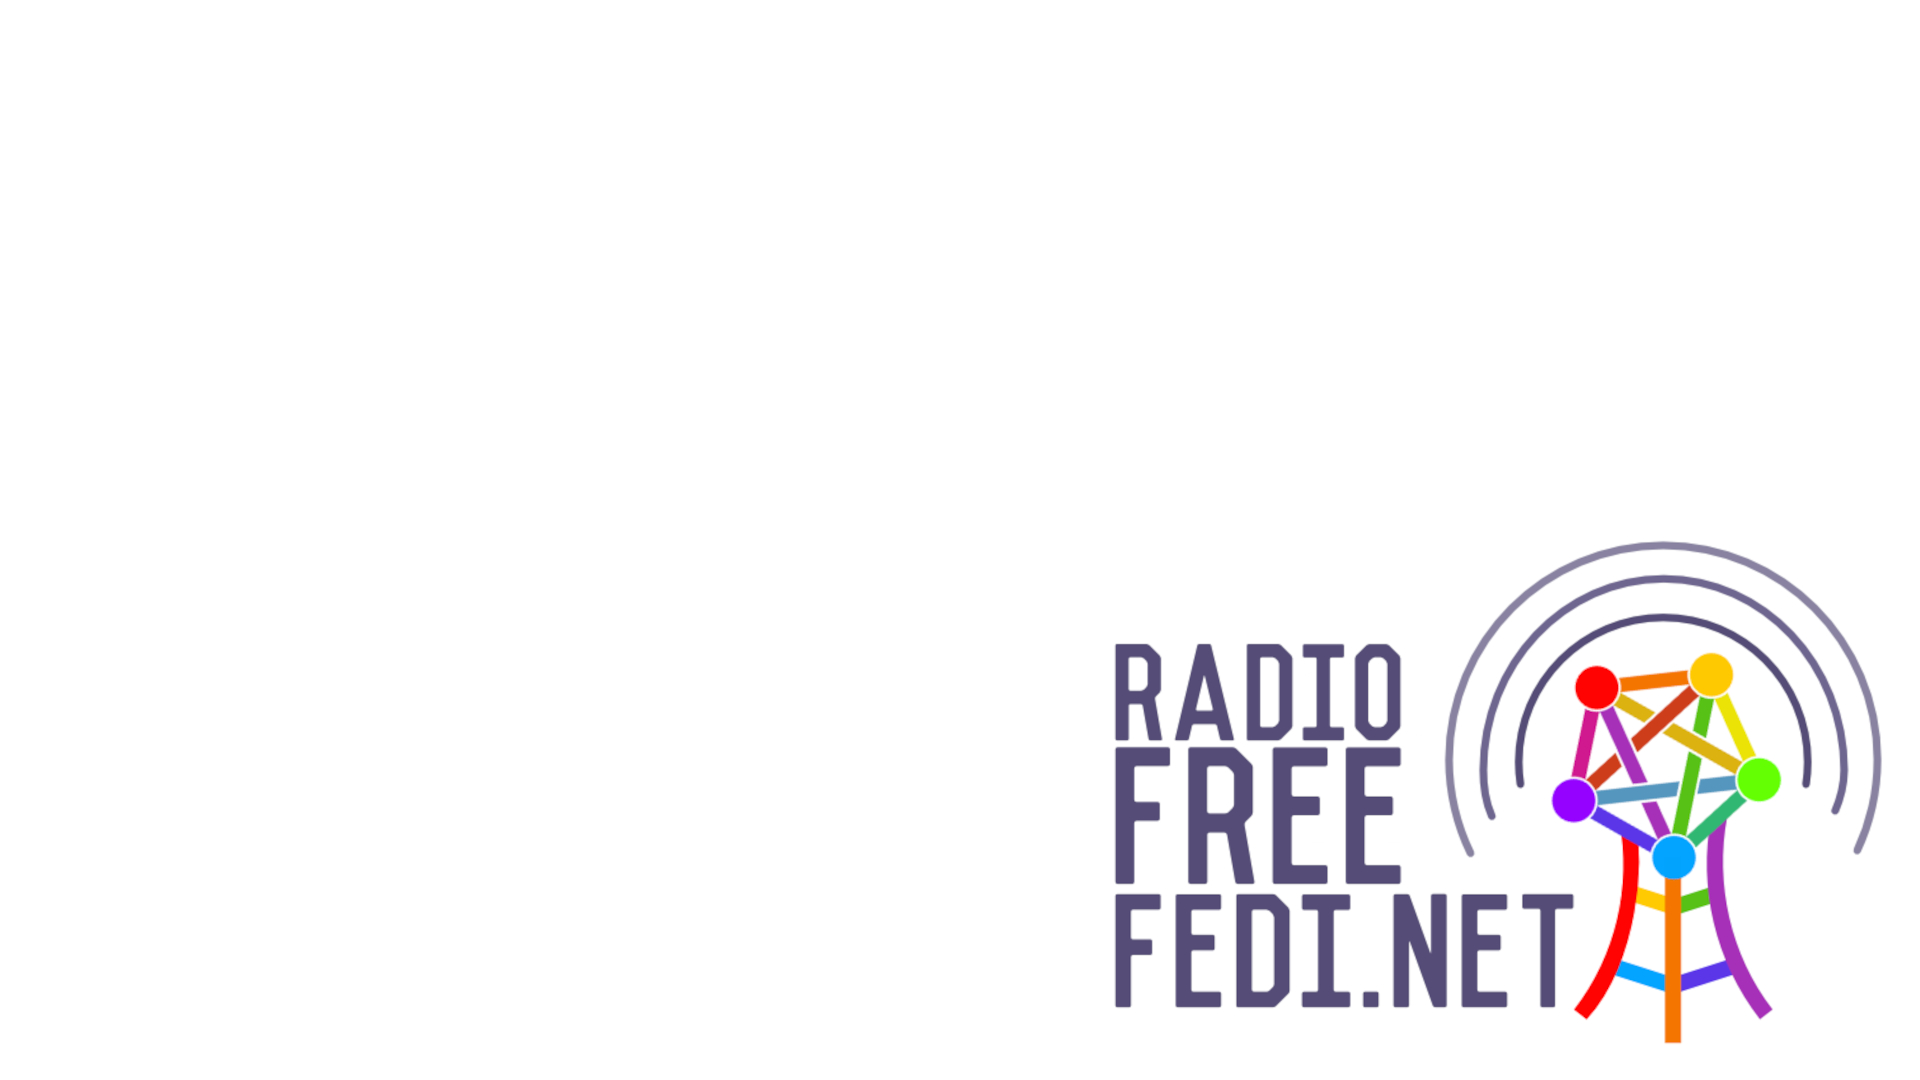 radio free fedi wallpaper 1080p white background with rainbow tower corner logo